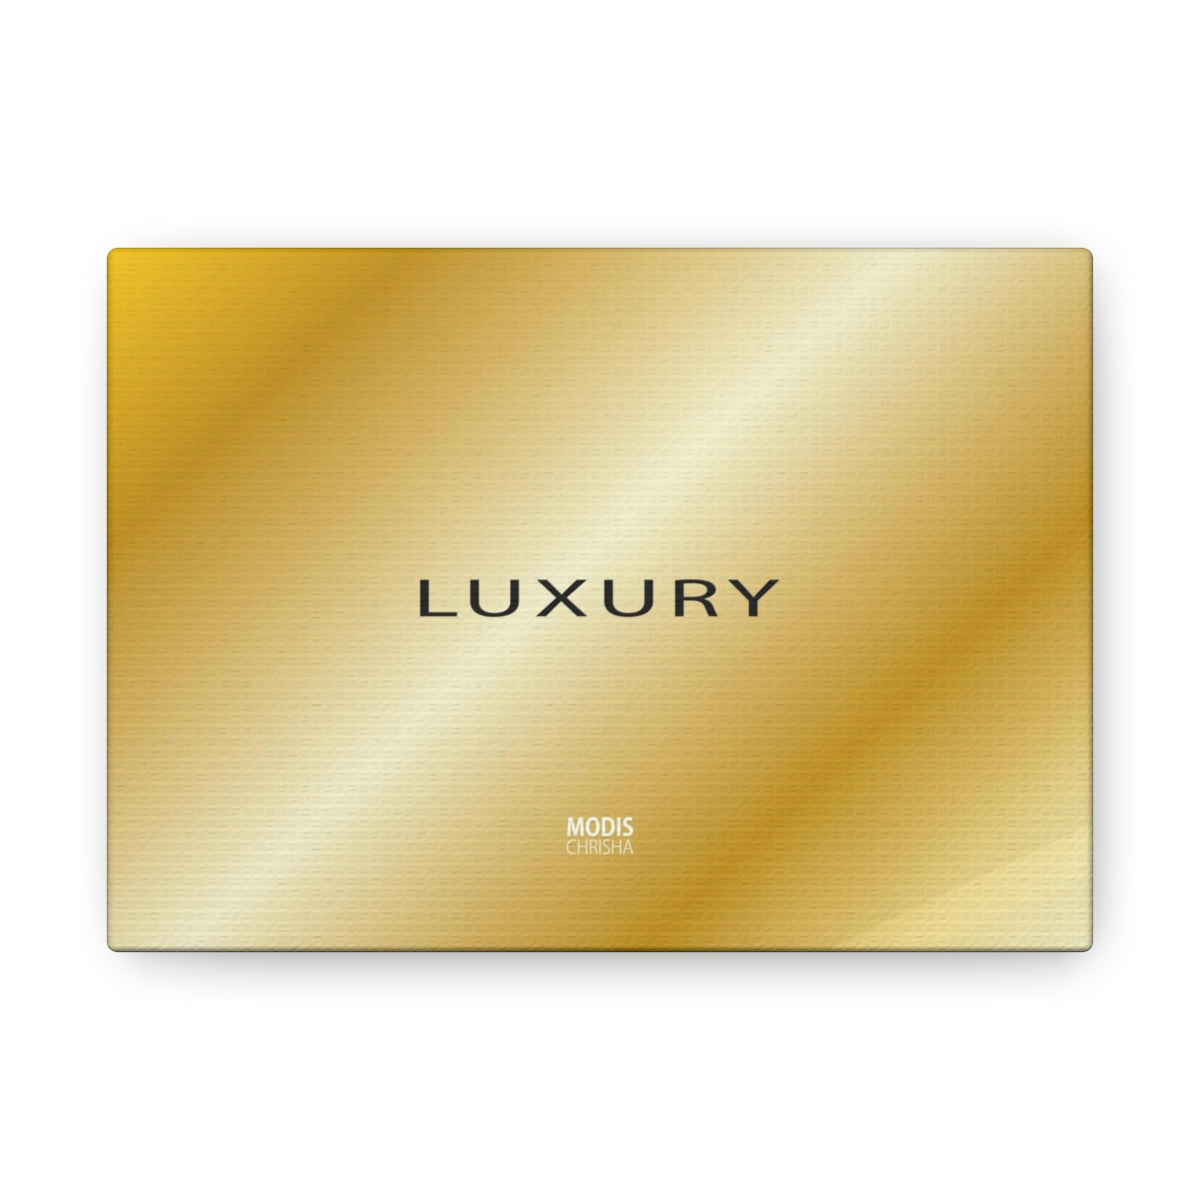 Canvas Gallery Wrap 7“ x 5“ - Design Luxury